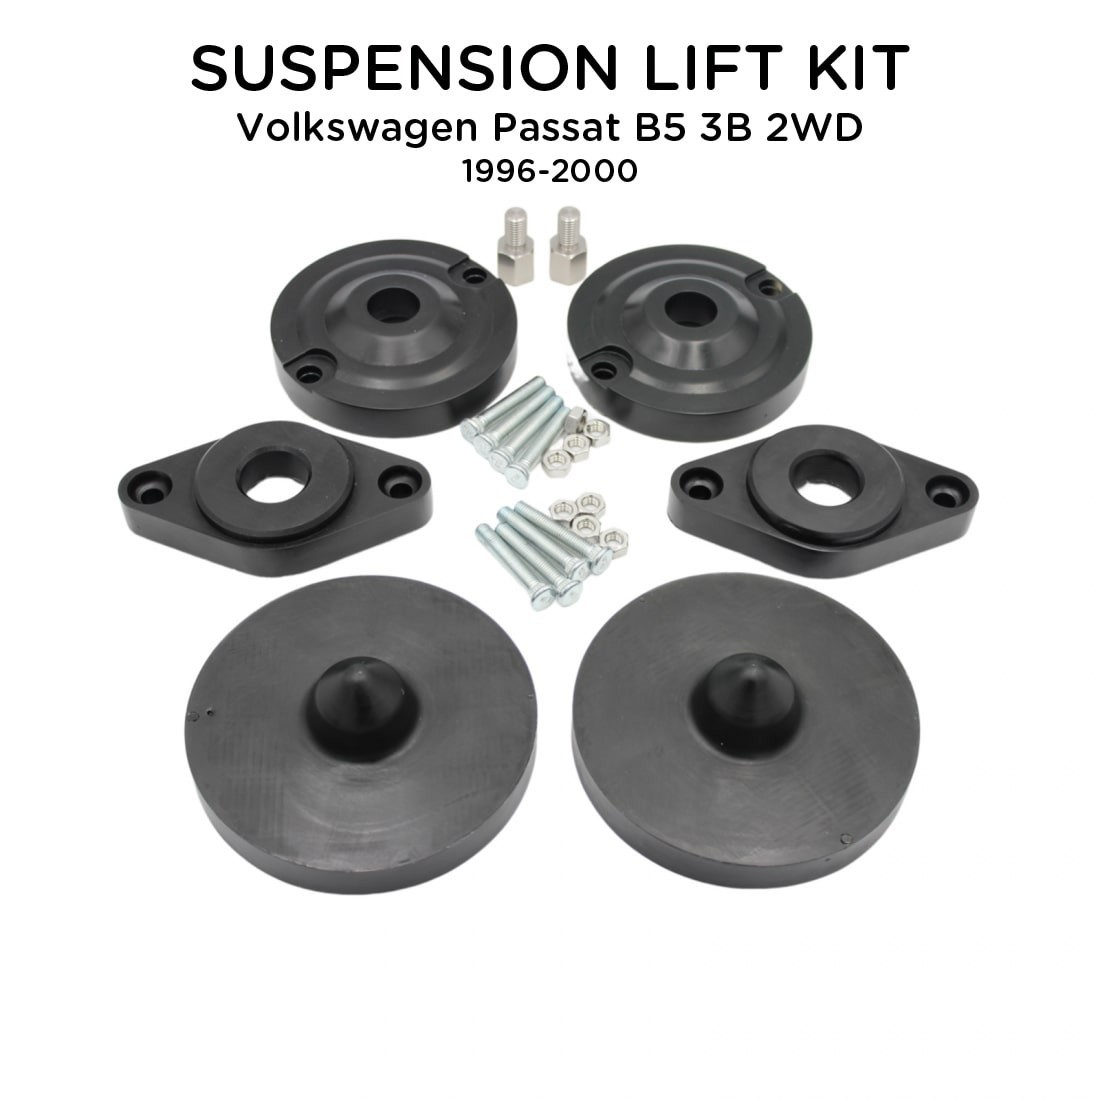 Suspension Lift Kit For Volkswagen Passat B5 3B 2WD 1996-2000